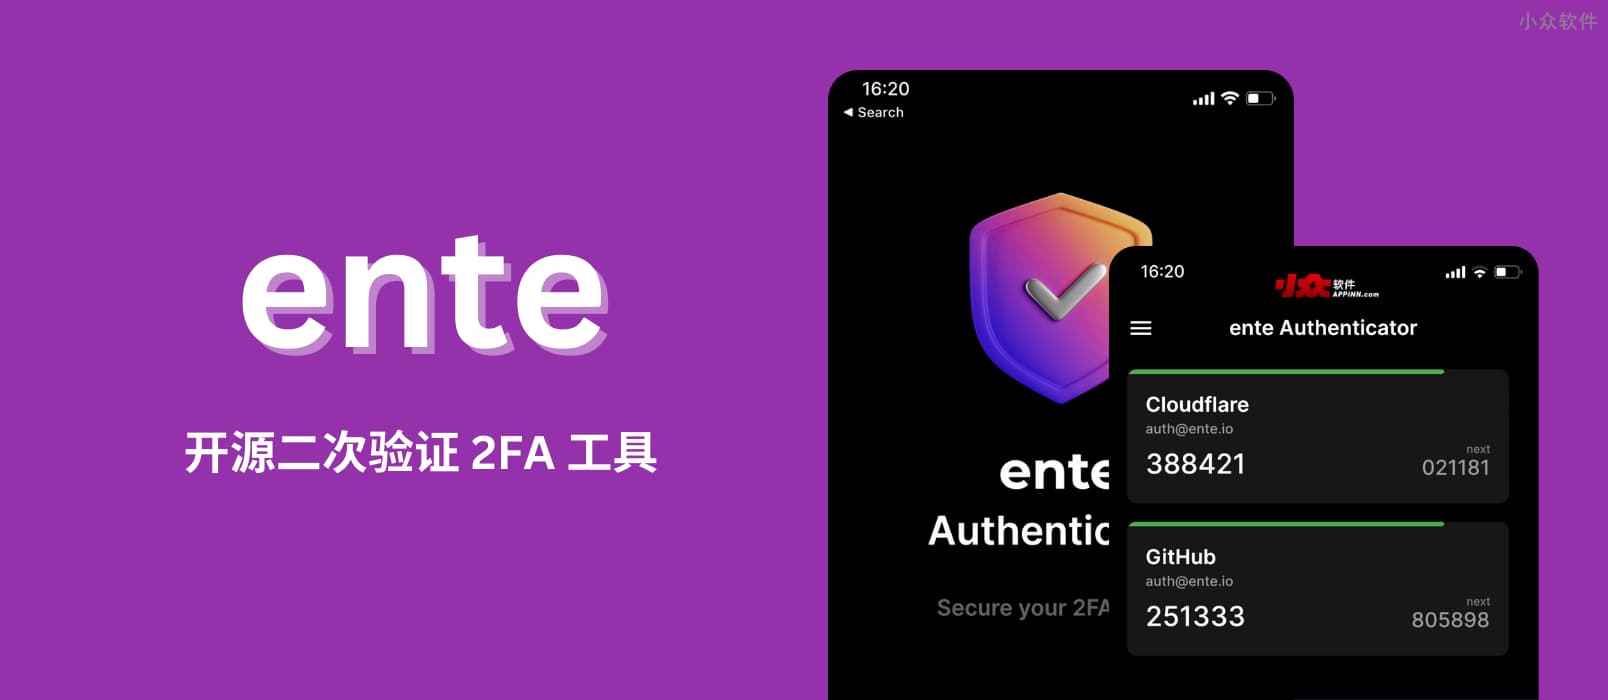 ente Authenticator – 开源二次验证 2FA 工具：云存储、同步、导入导出[Android/iOS]